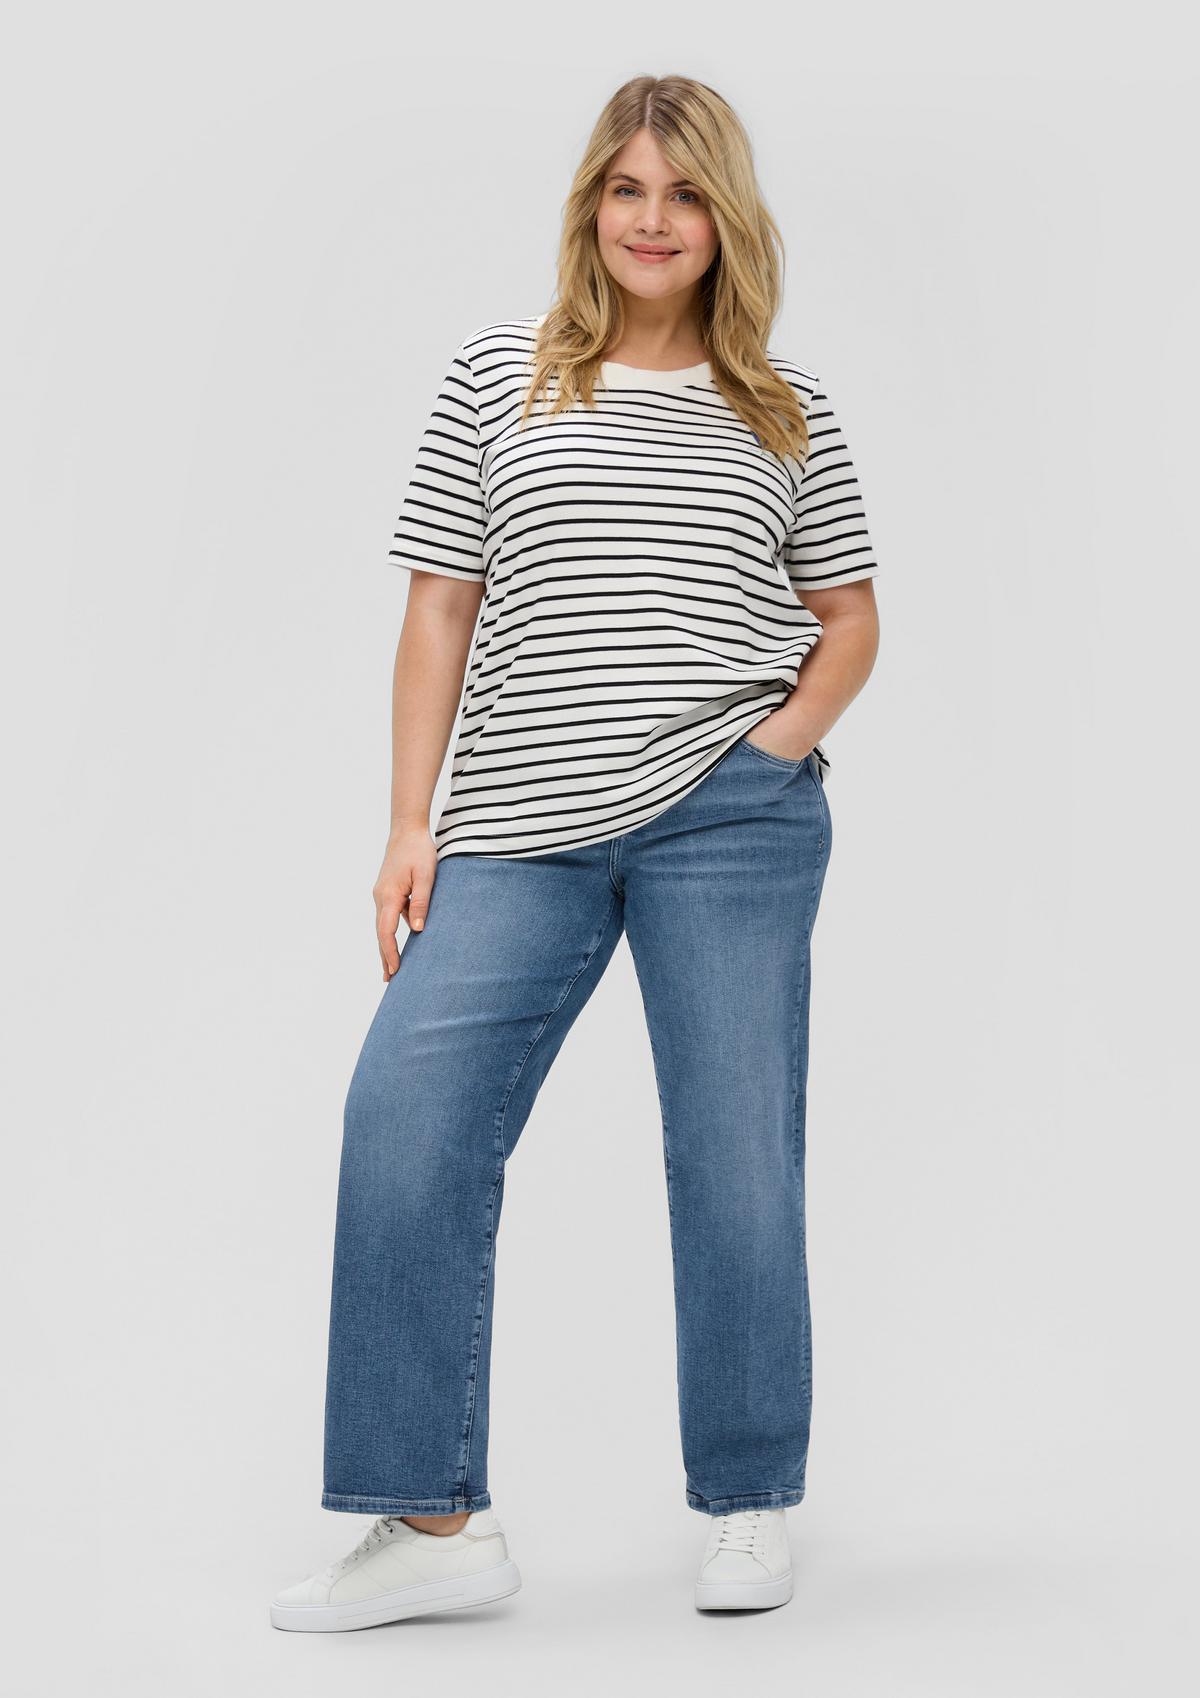 Jeans / regular fit / mid rise / straight leg